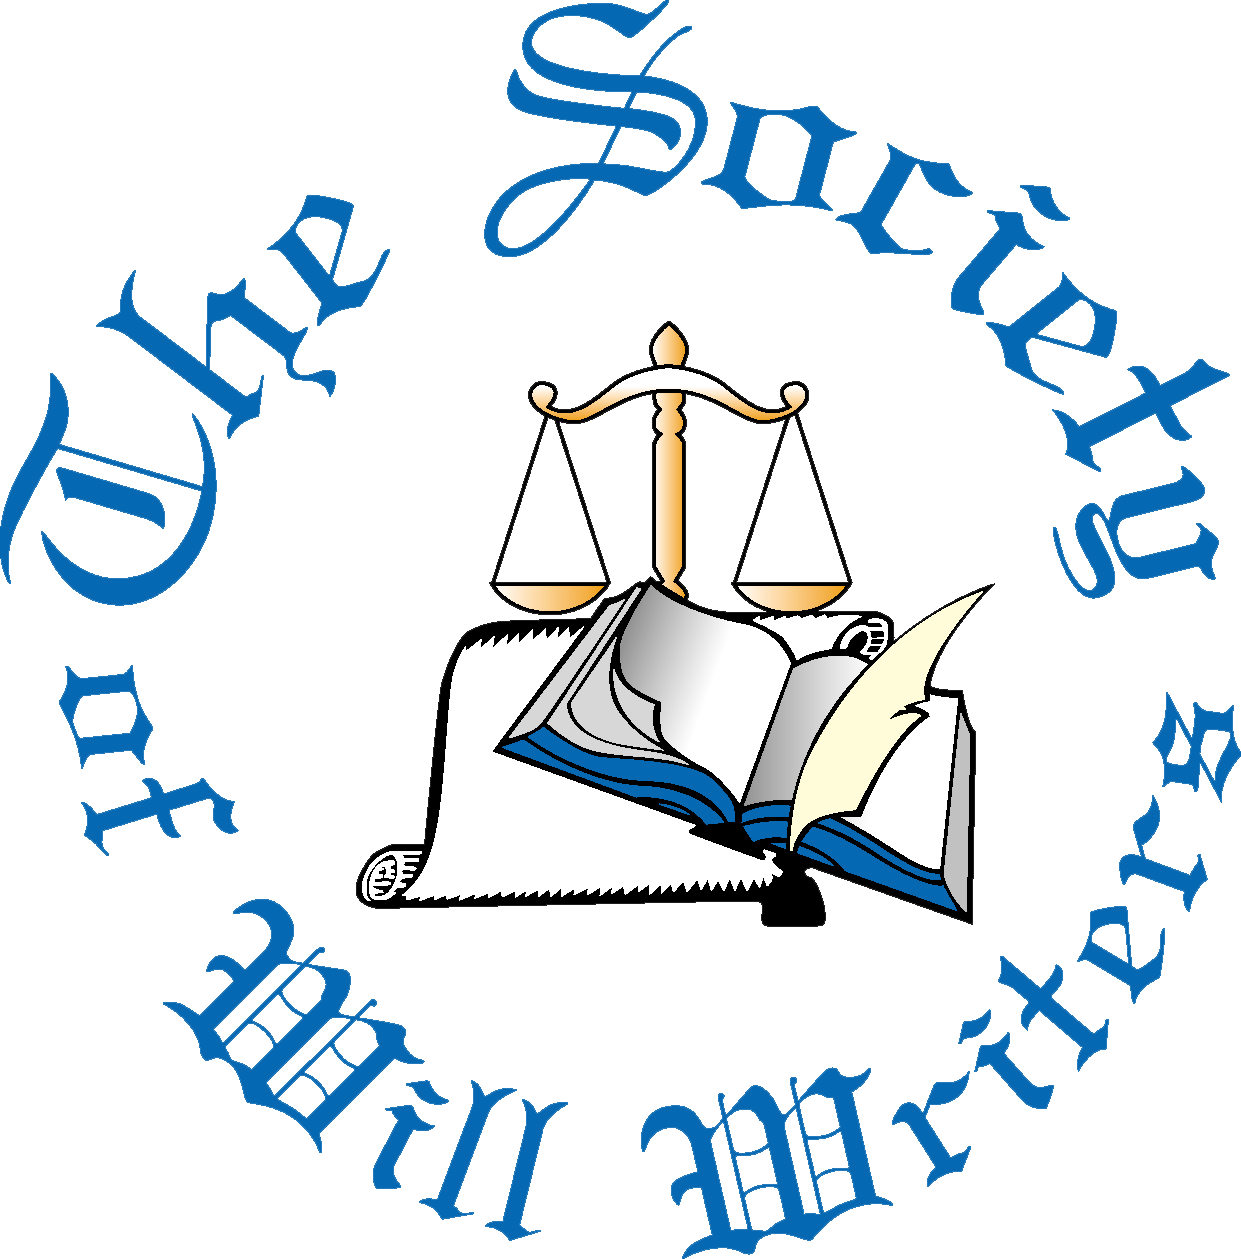 The society of wills logo